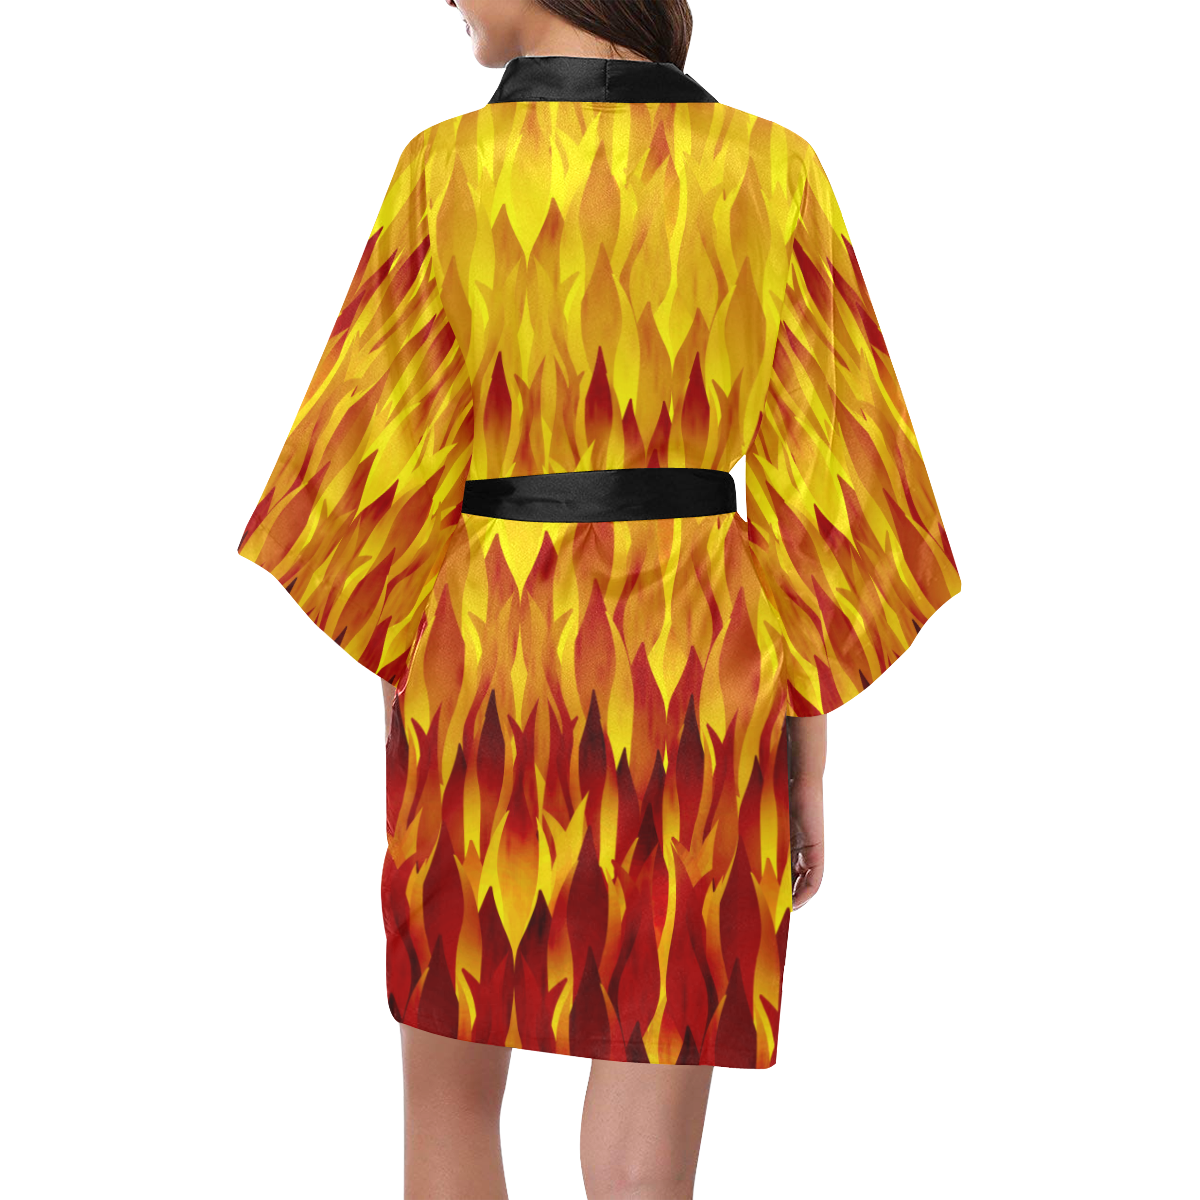 Hot Fire and Flames Illustration Kimono Robe